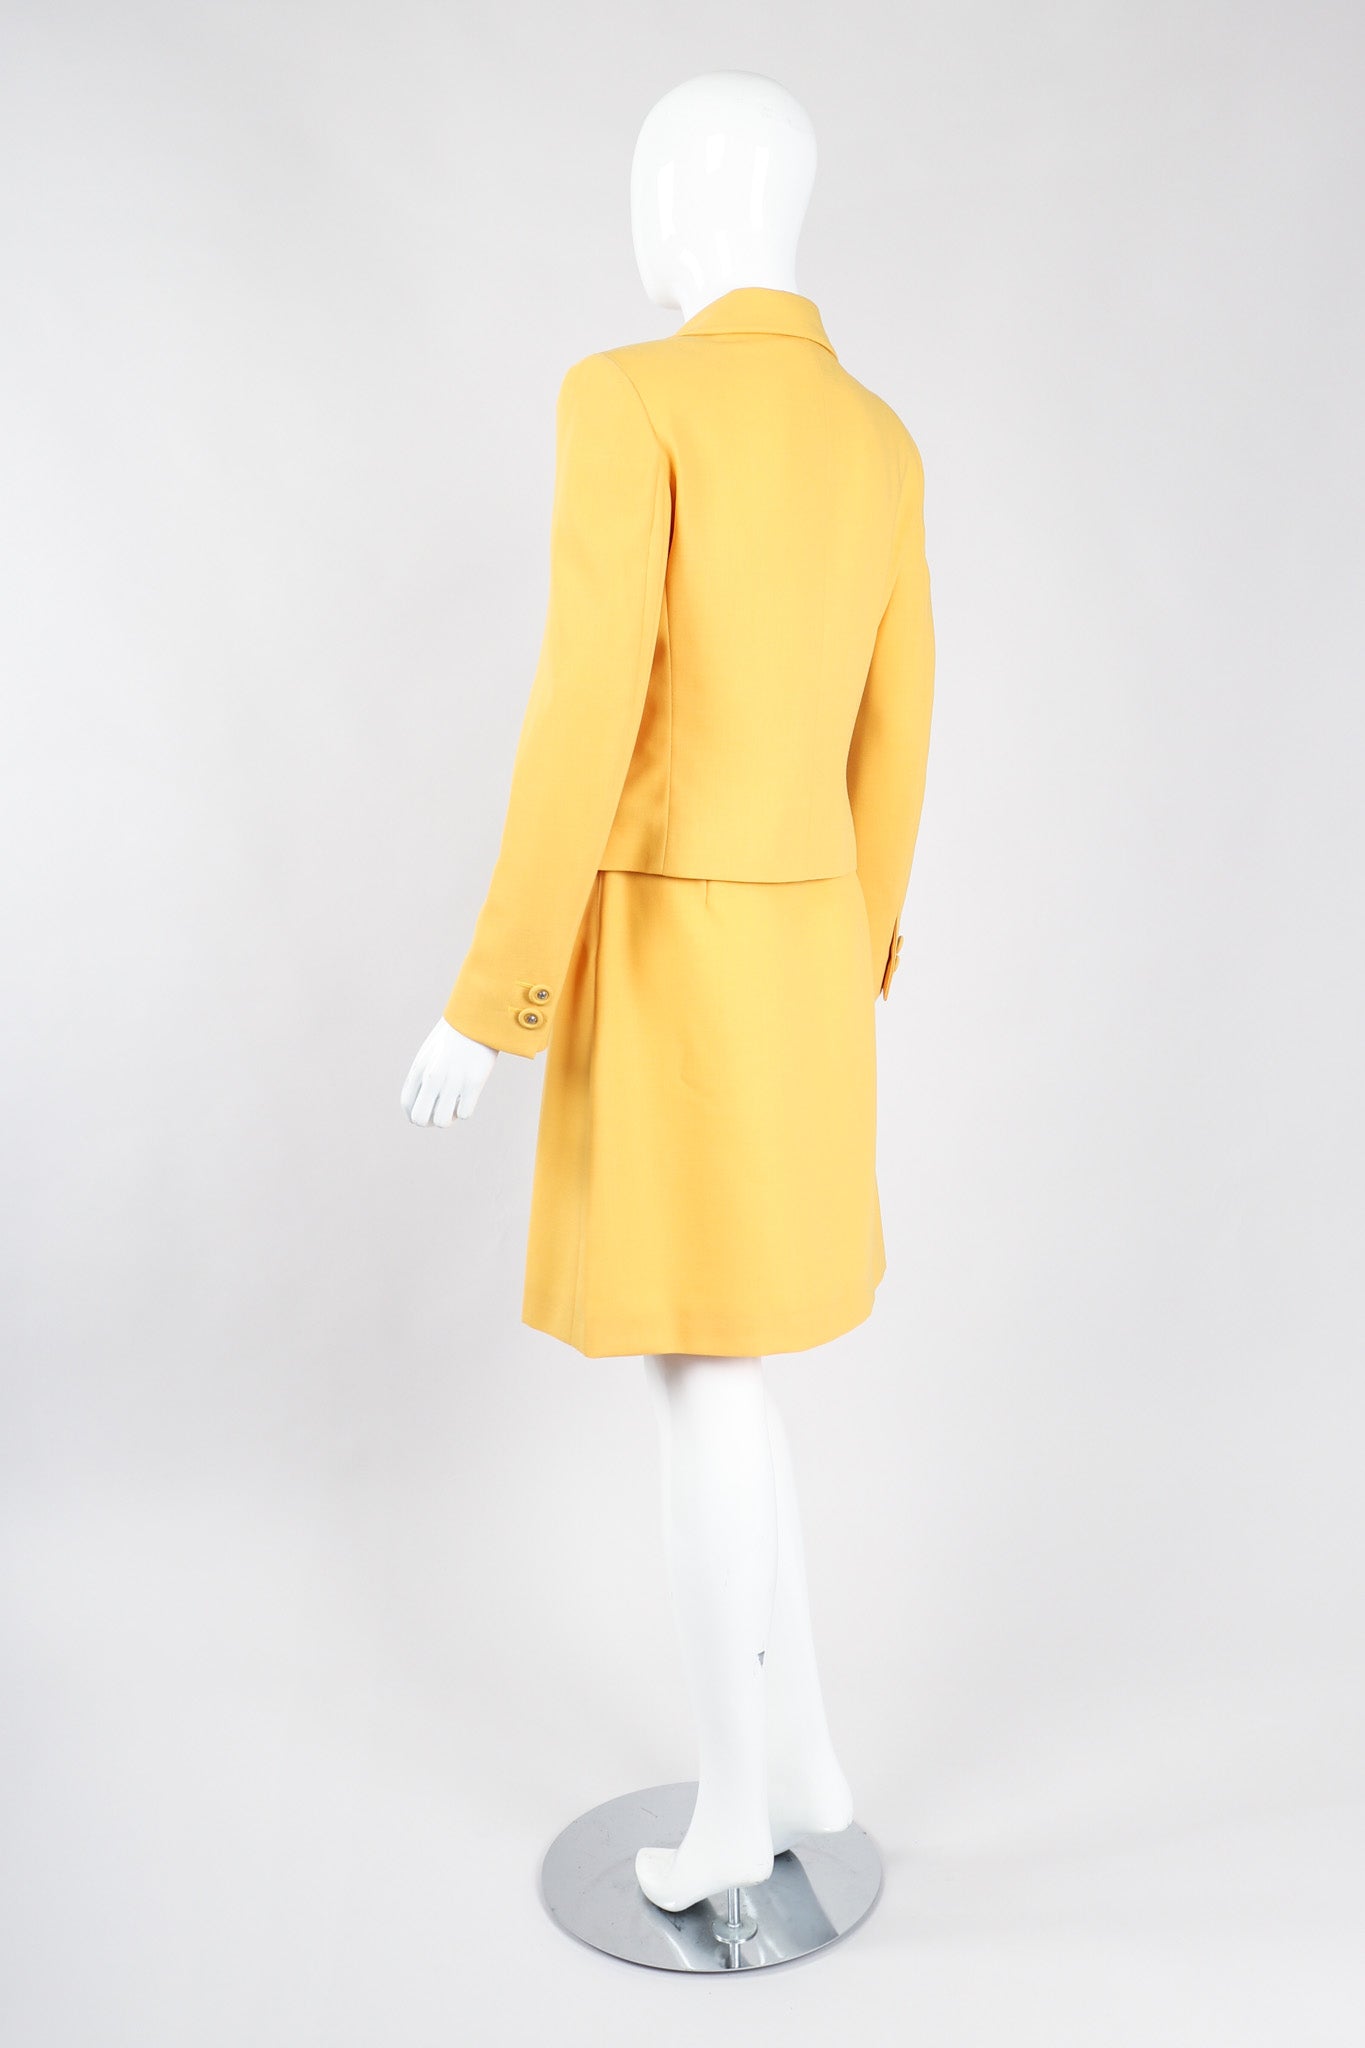 Recess Los Angeles Vintage Istante Versace Jackie O Golden Jacket & Skirt Suit Set